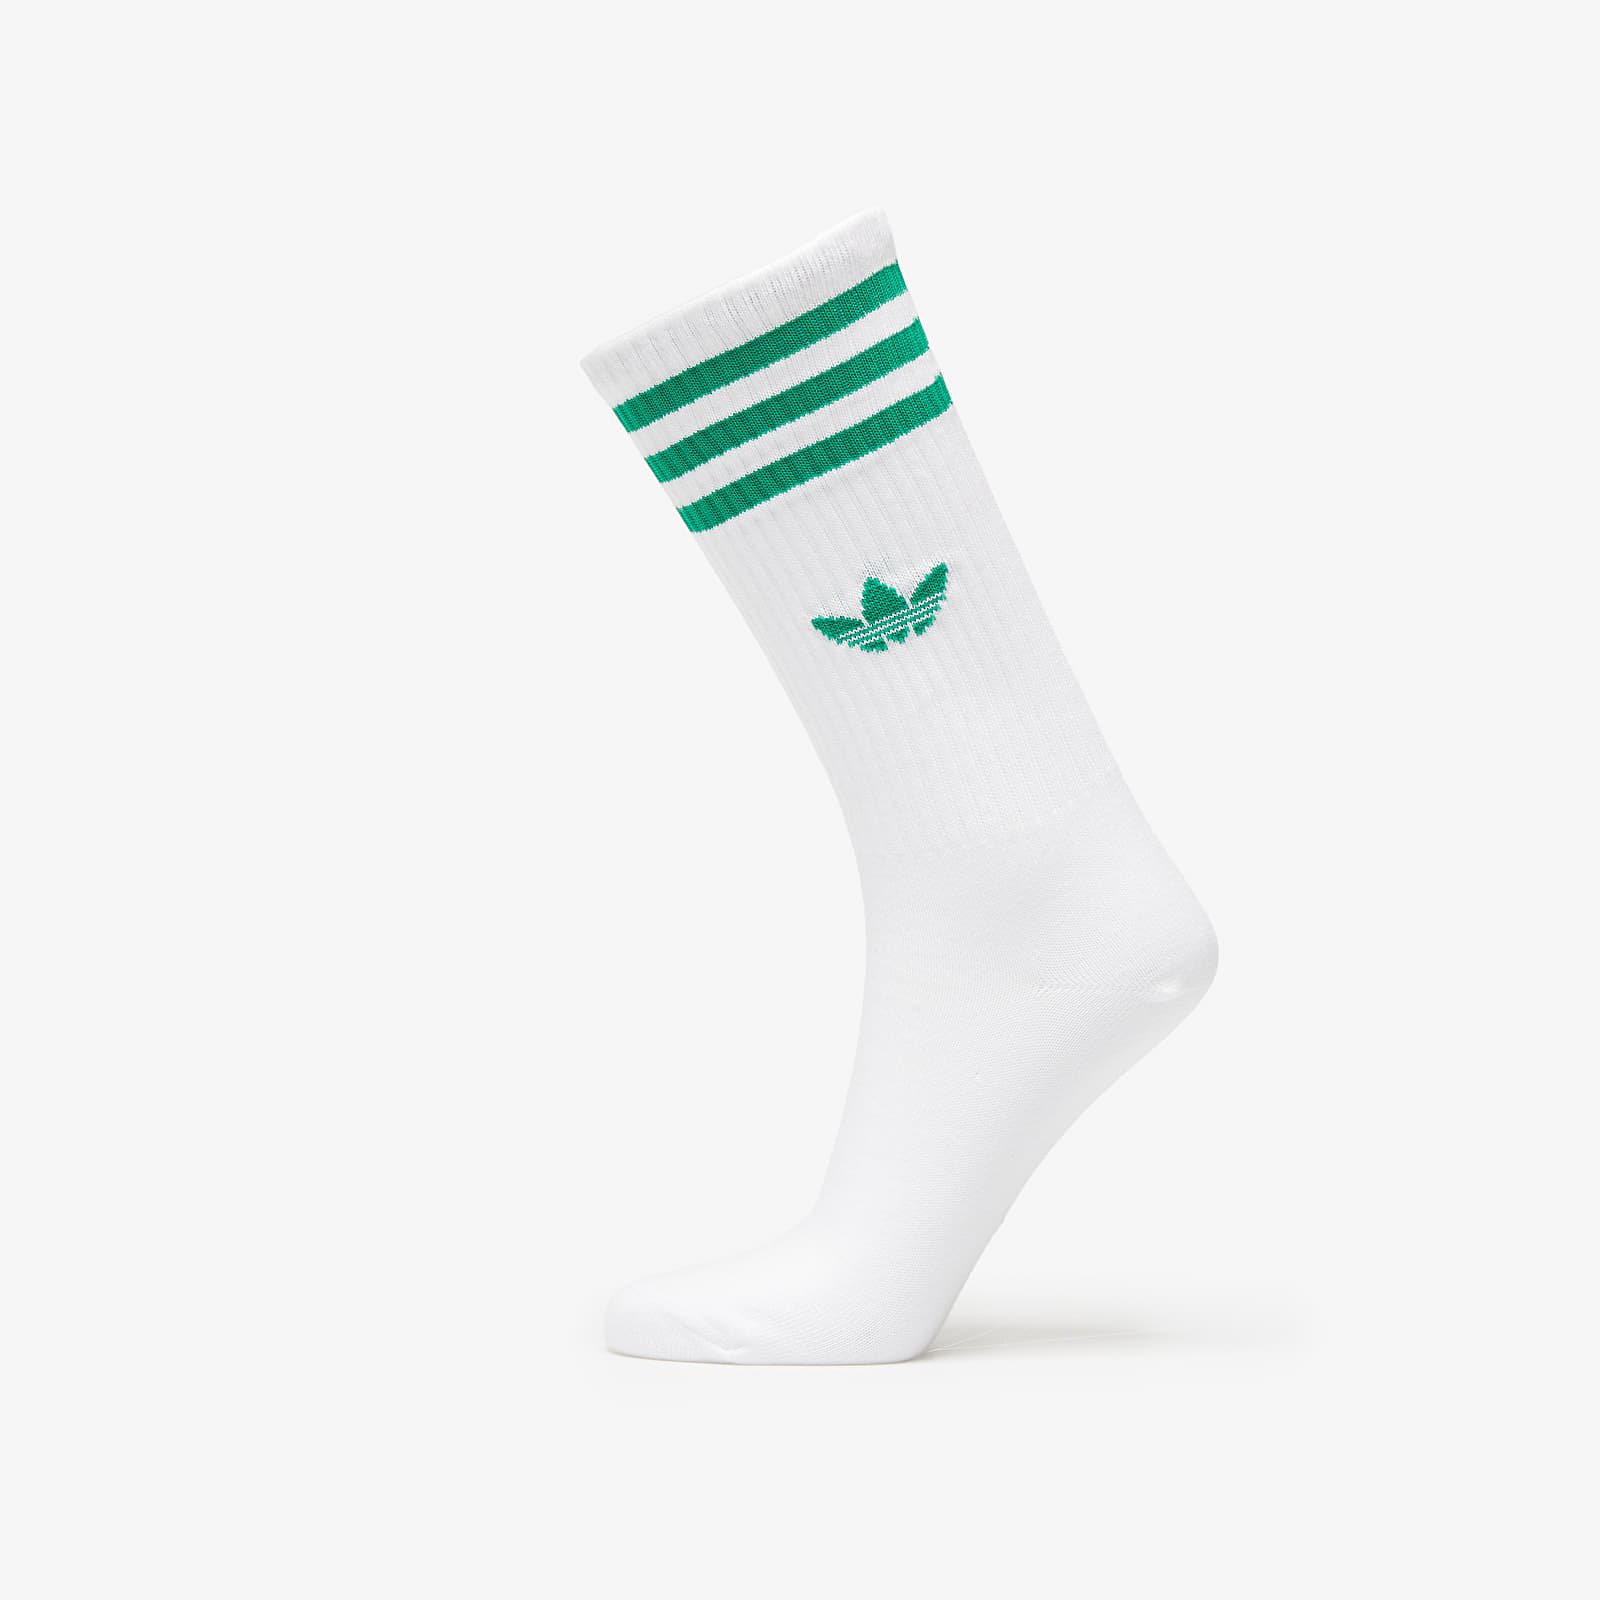 Solid Crew Socks – 3 pairs